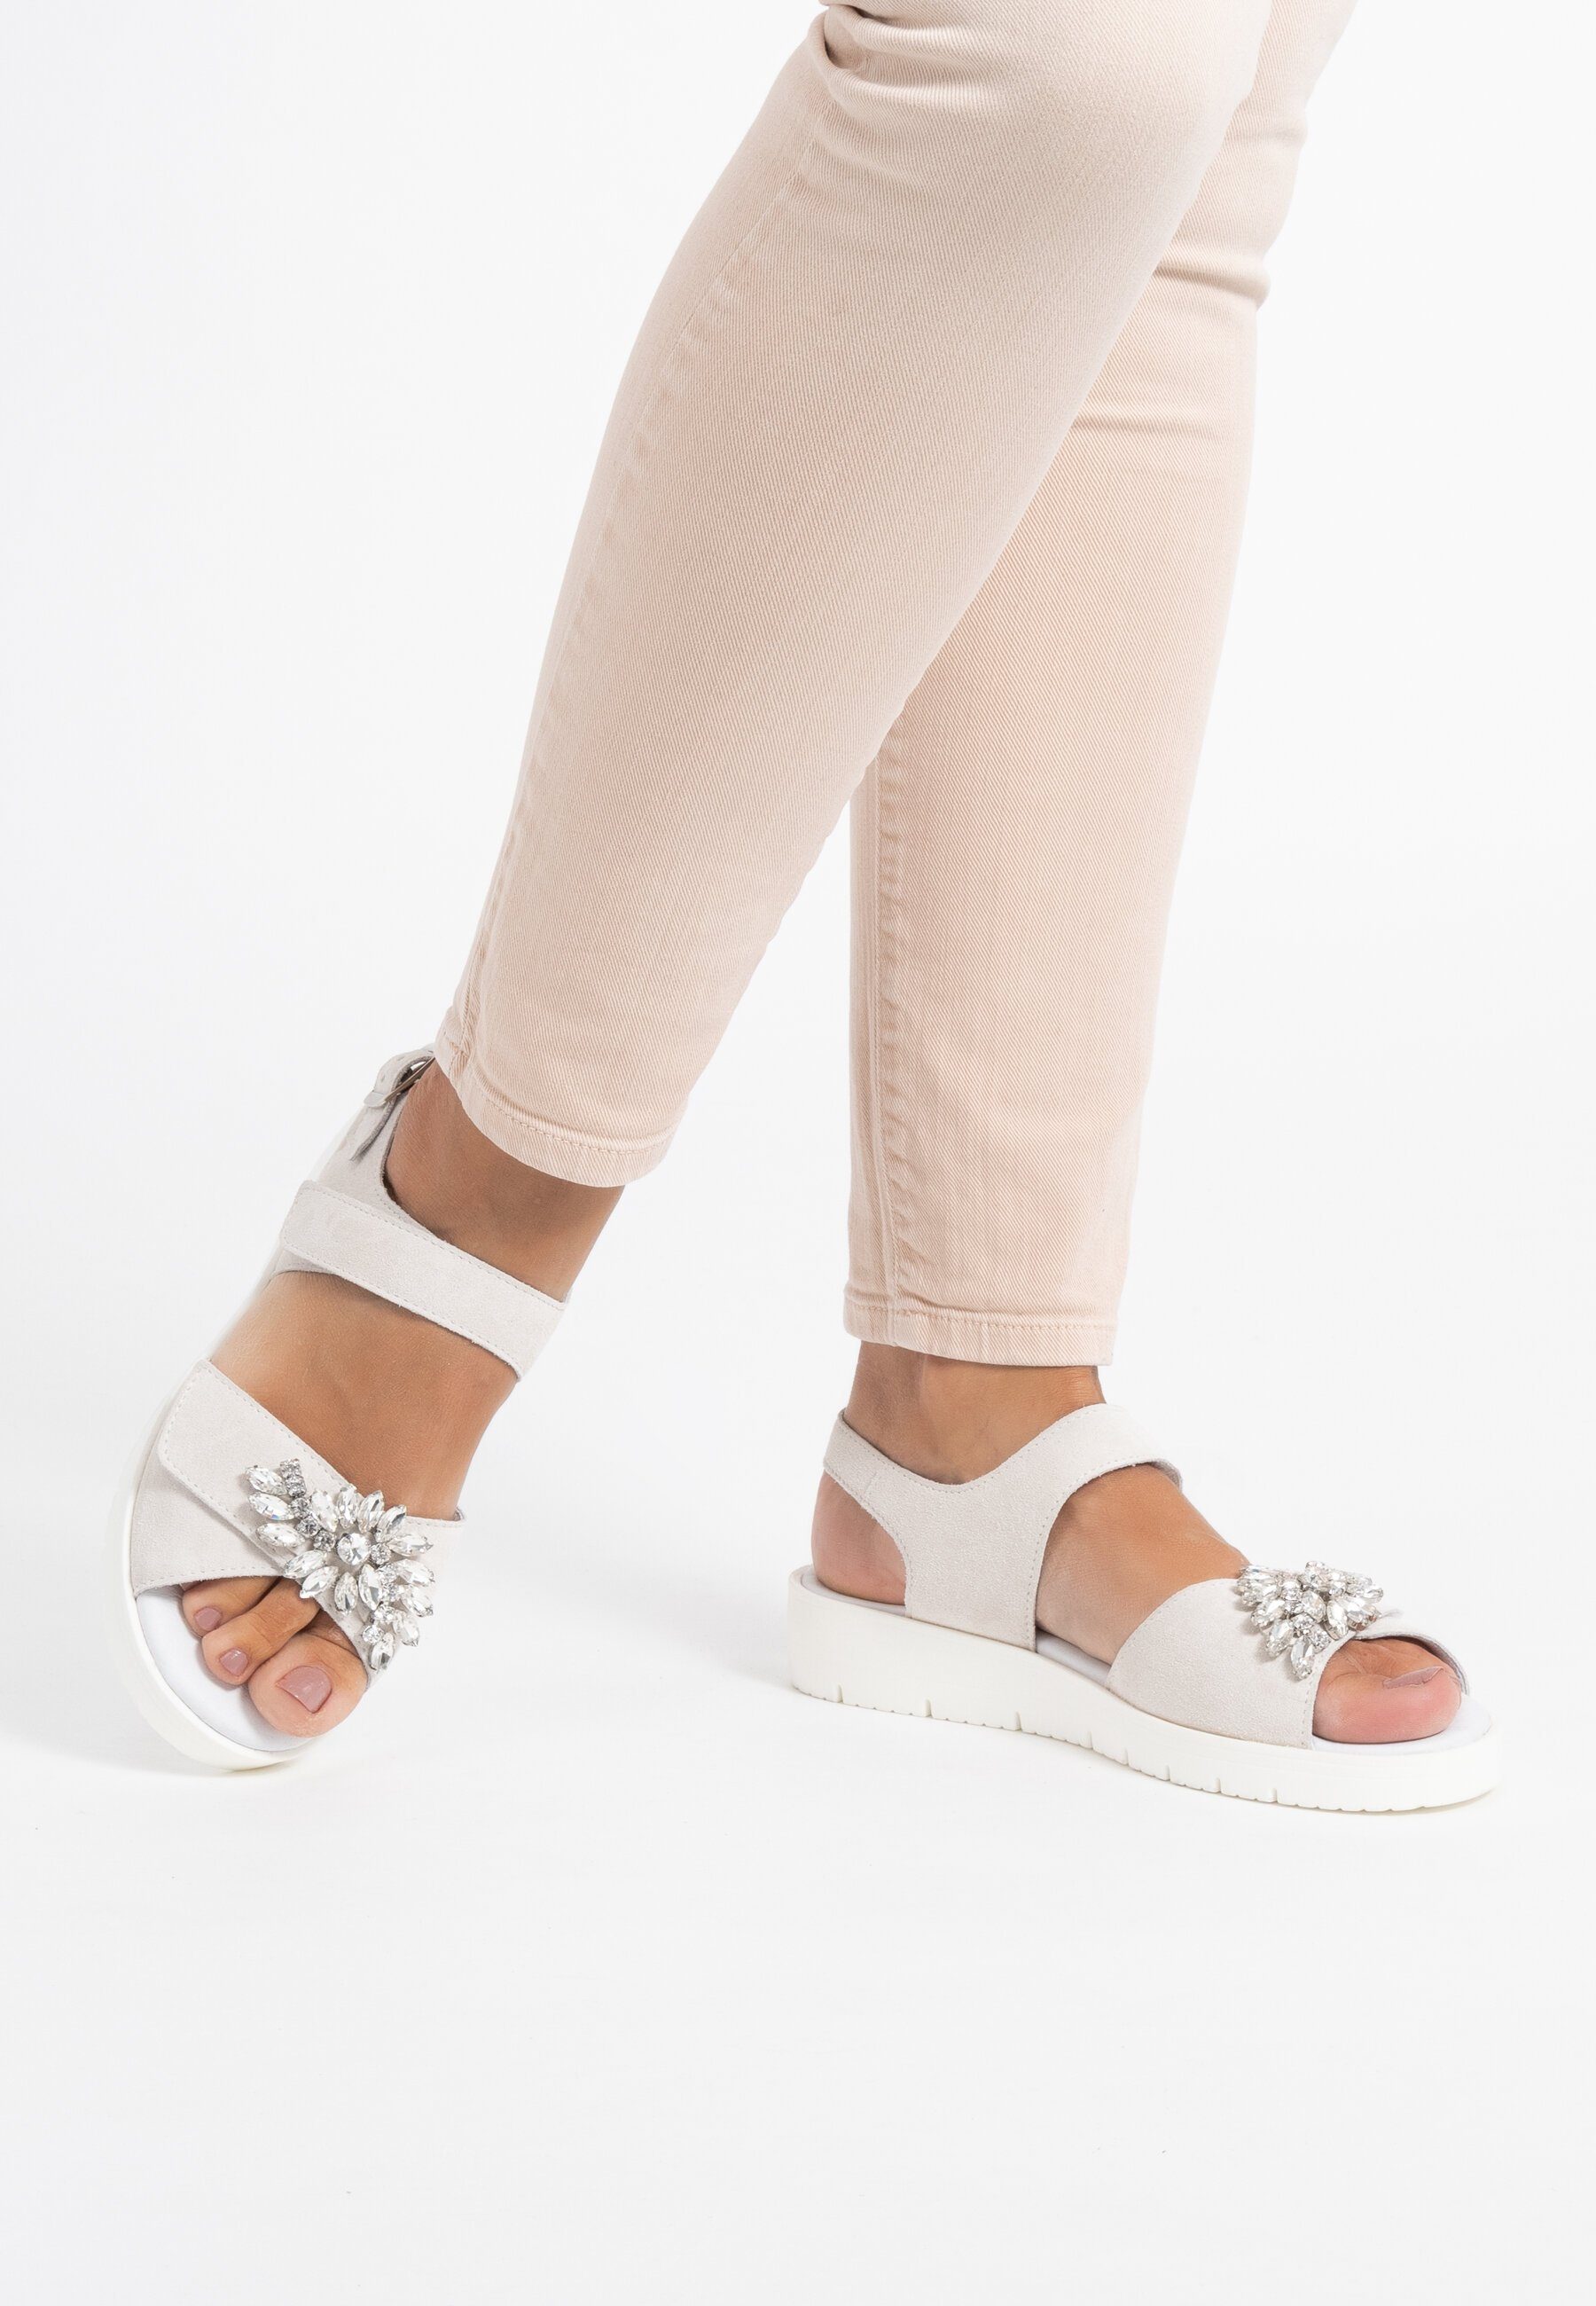 Damenschuhe Sandale weiß Sandale vitaform Veloursleder